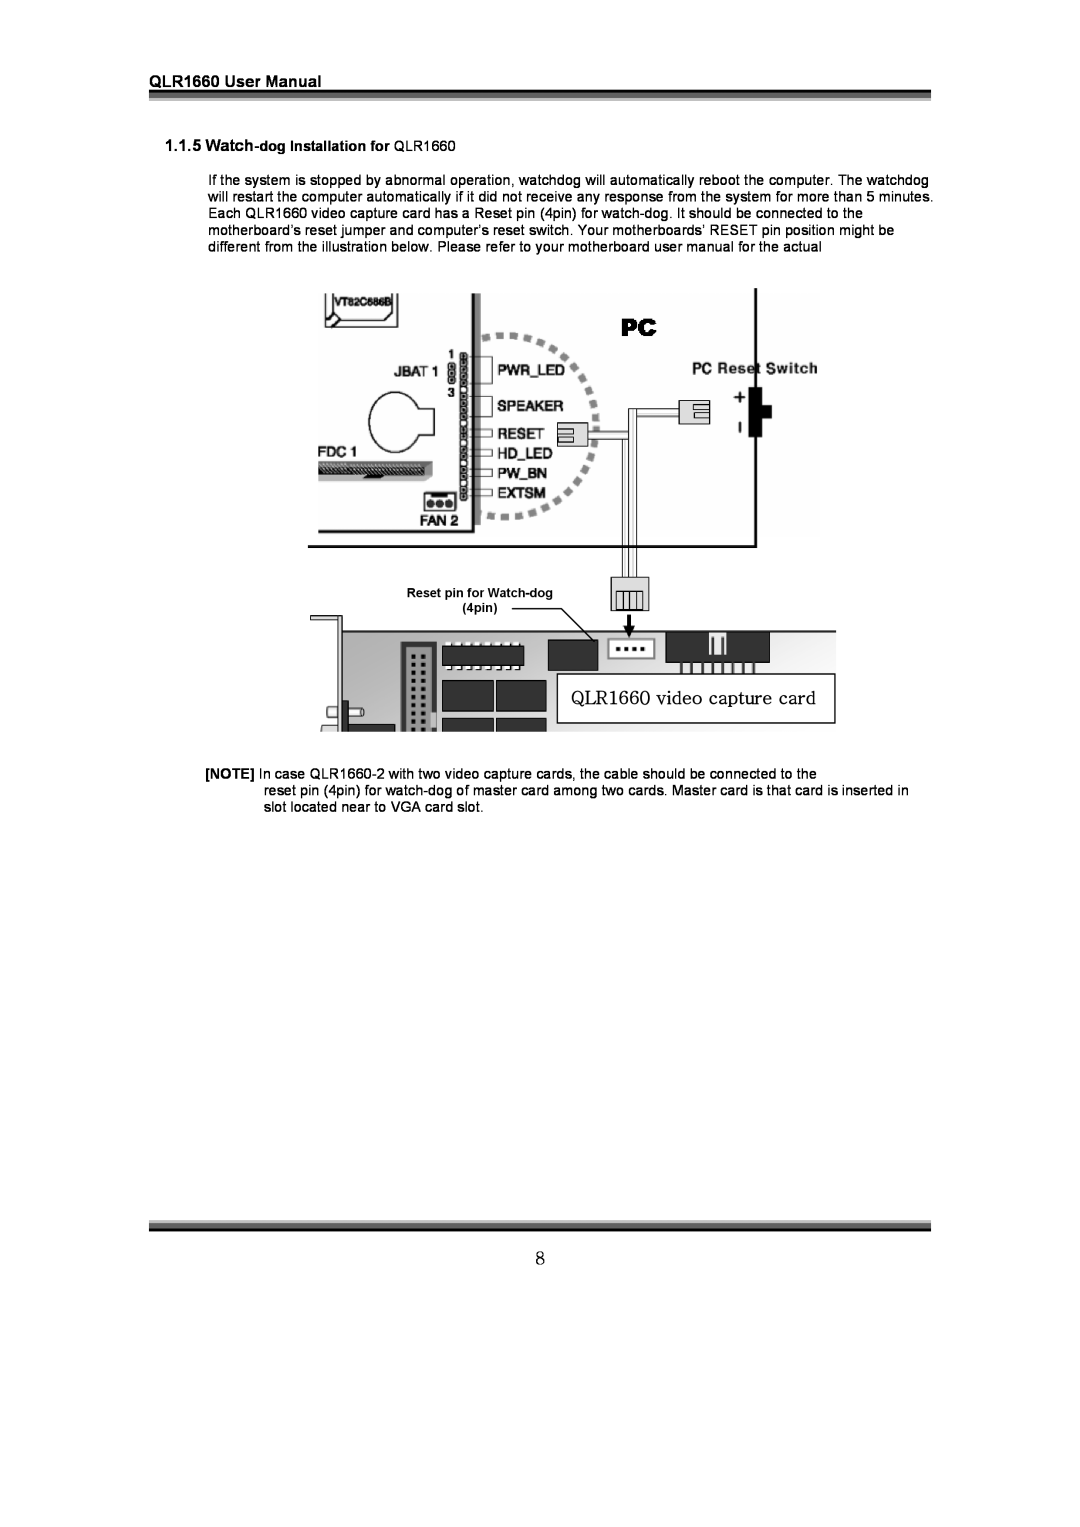 LOREX Technology instruction manual QLR1660 video capture card, 1.1.5Watch-dogInstallation for QLR1660 